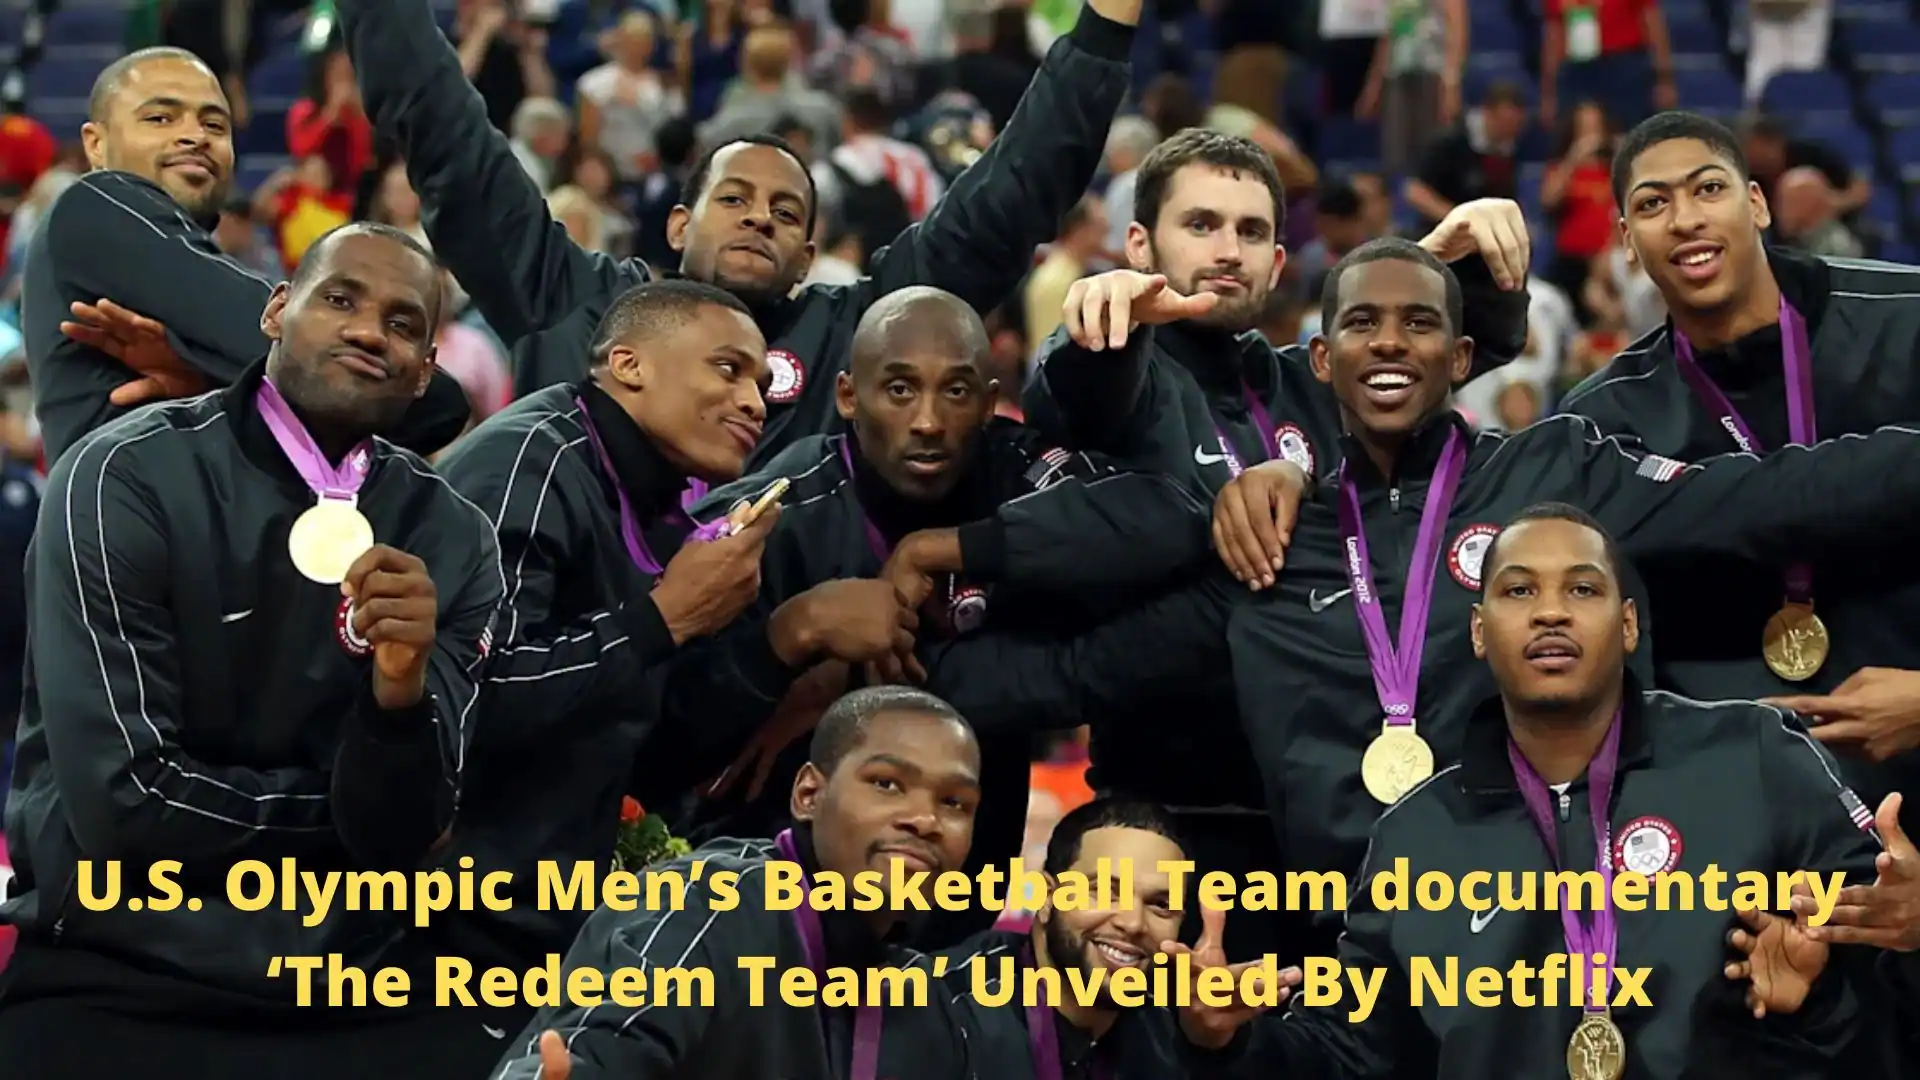 U.S. Olympic Men’s Basketball Team documentary ‘The Redeem Team’ Unveiled By Netflix